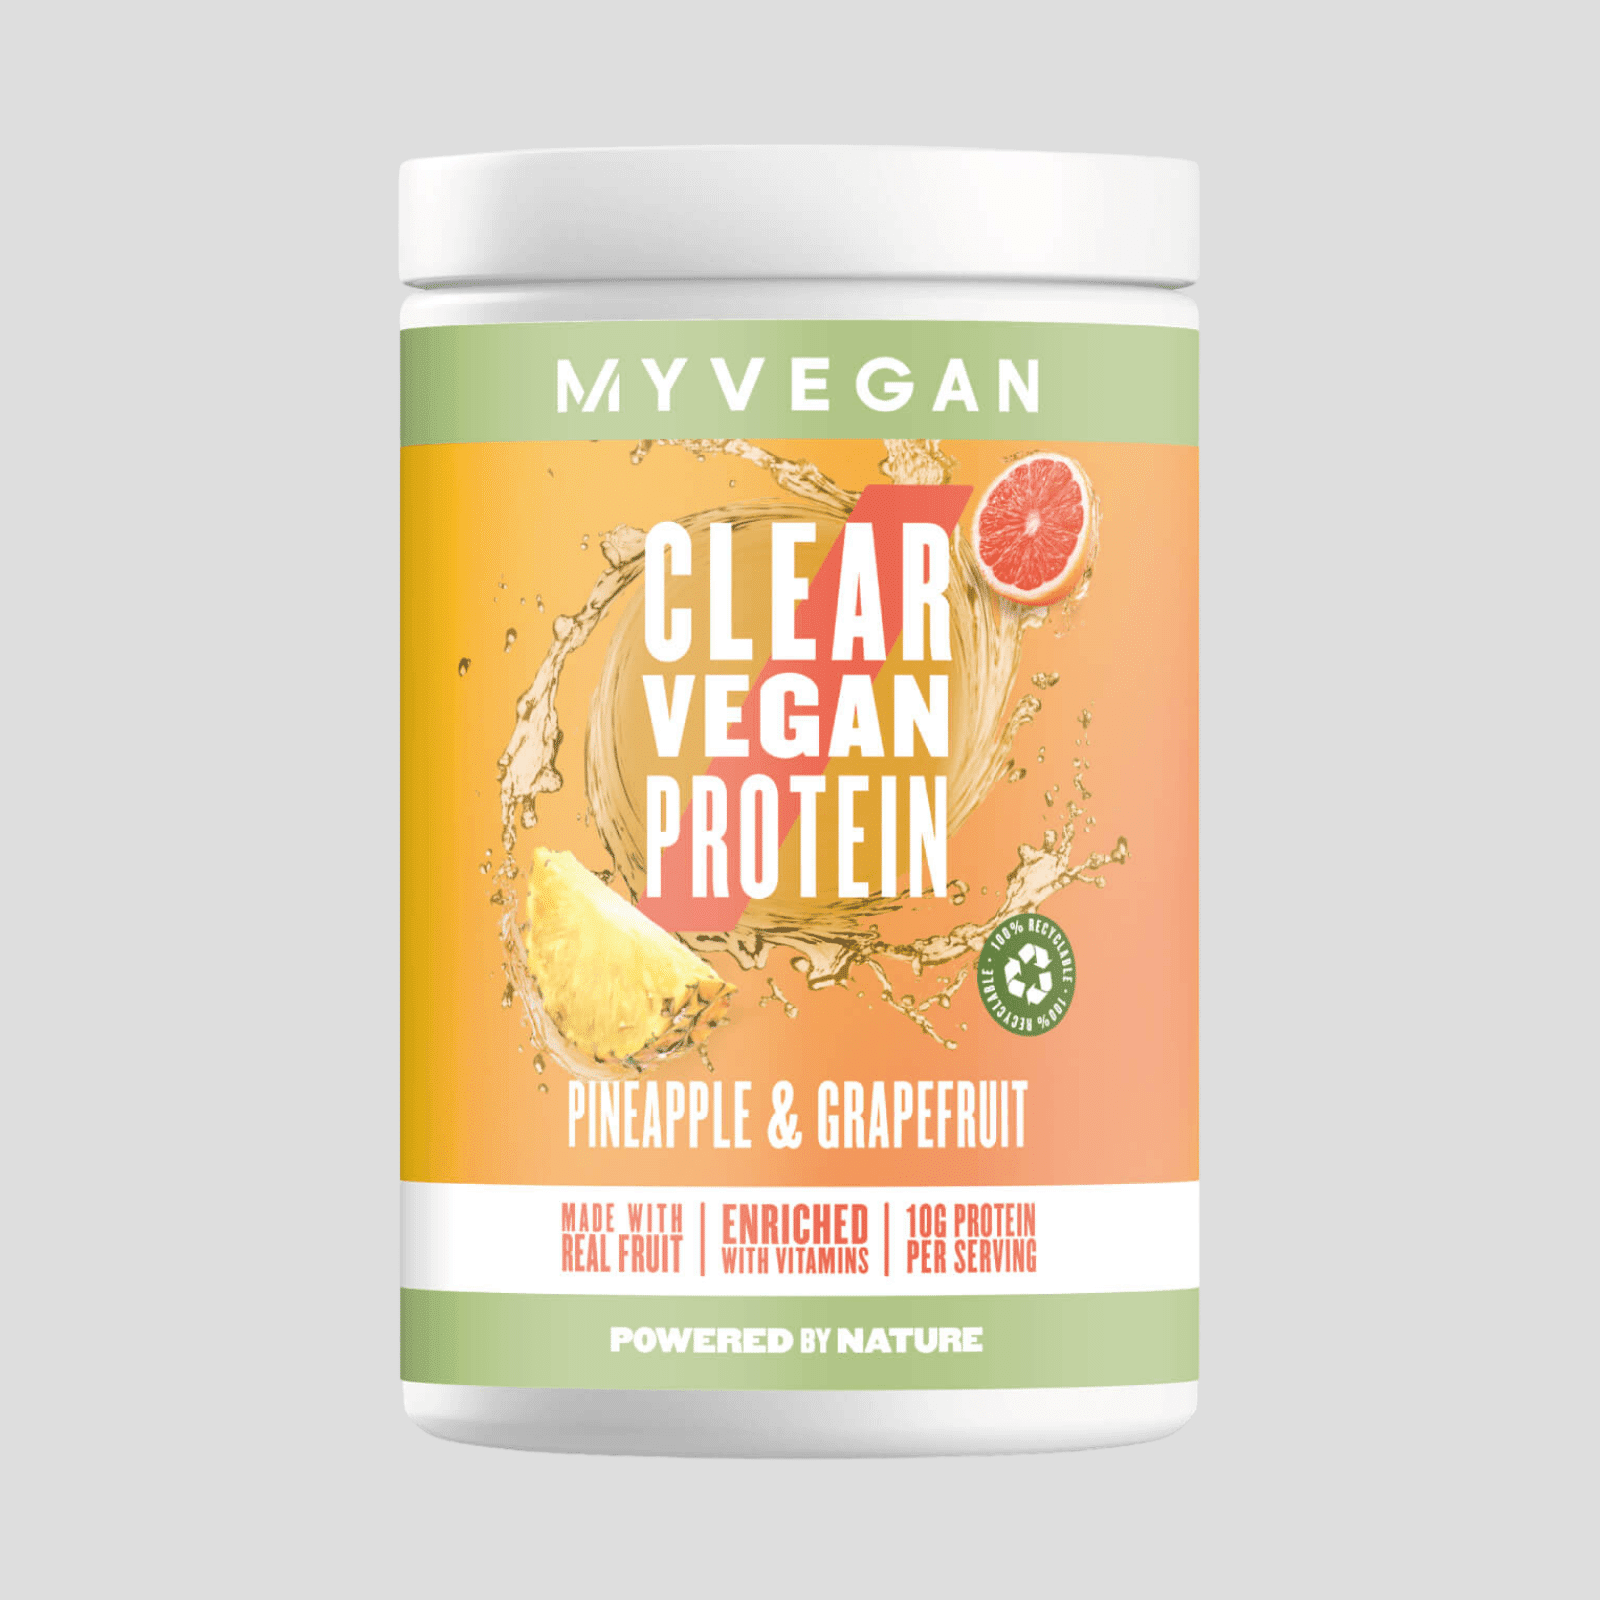 Myvegan Clear Vegan Protein - 320g - Pineapple & Grapefruit